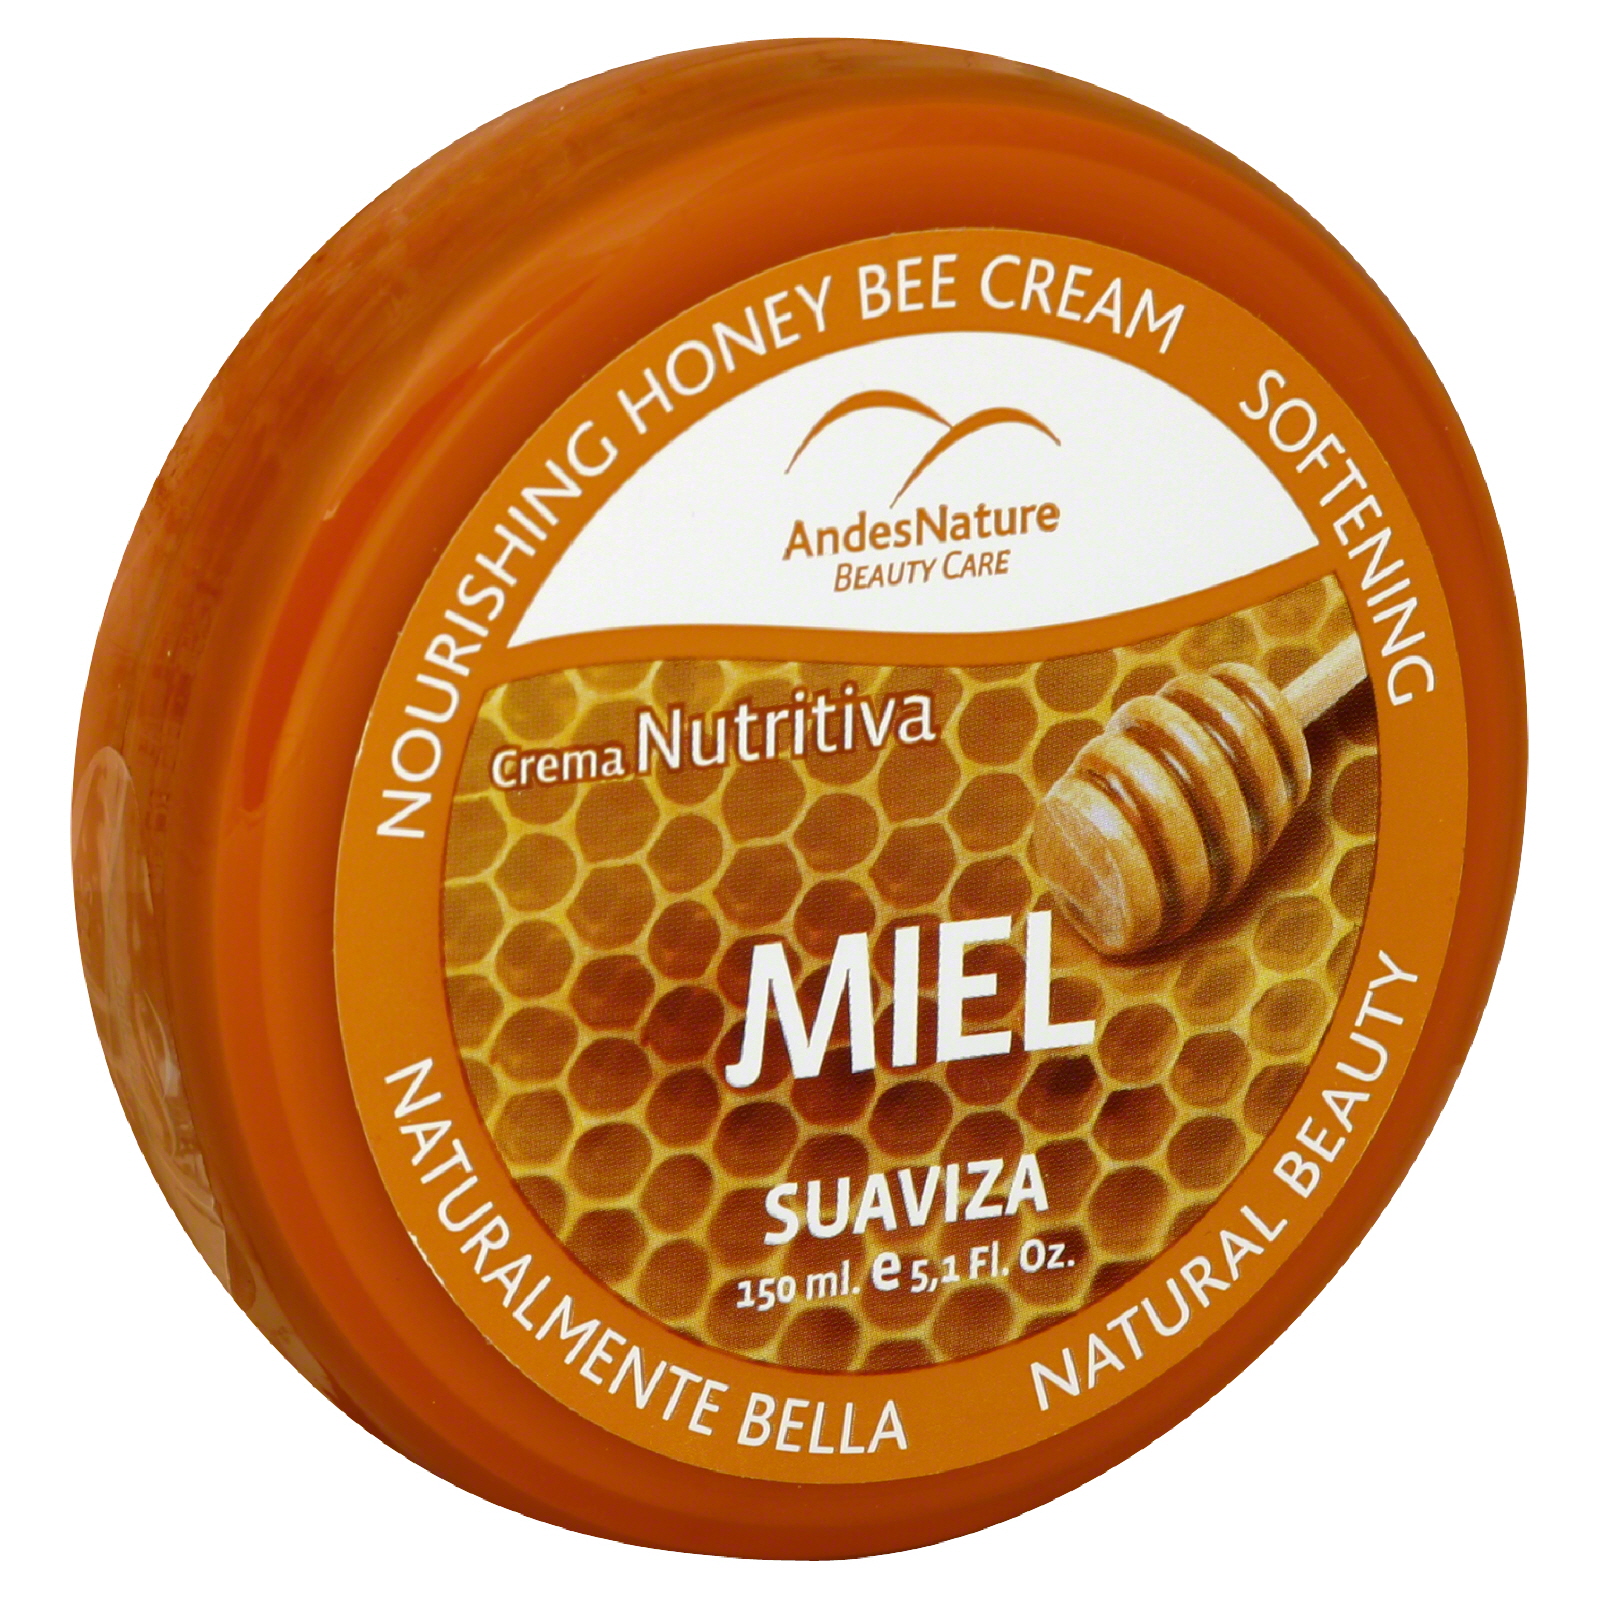 Andes Nature Beauty Care Honey Bee Cream Nourishing Softening 5.1 fl oz